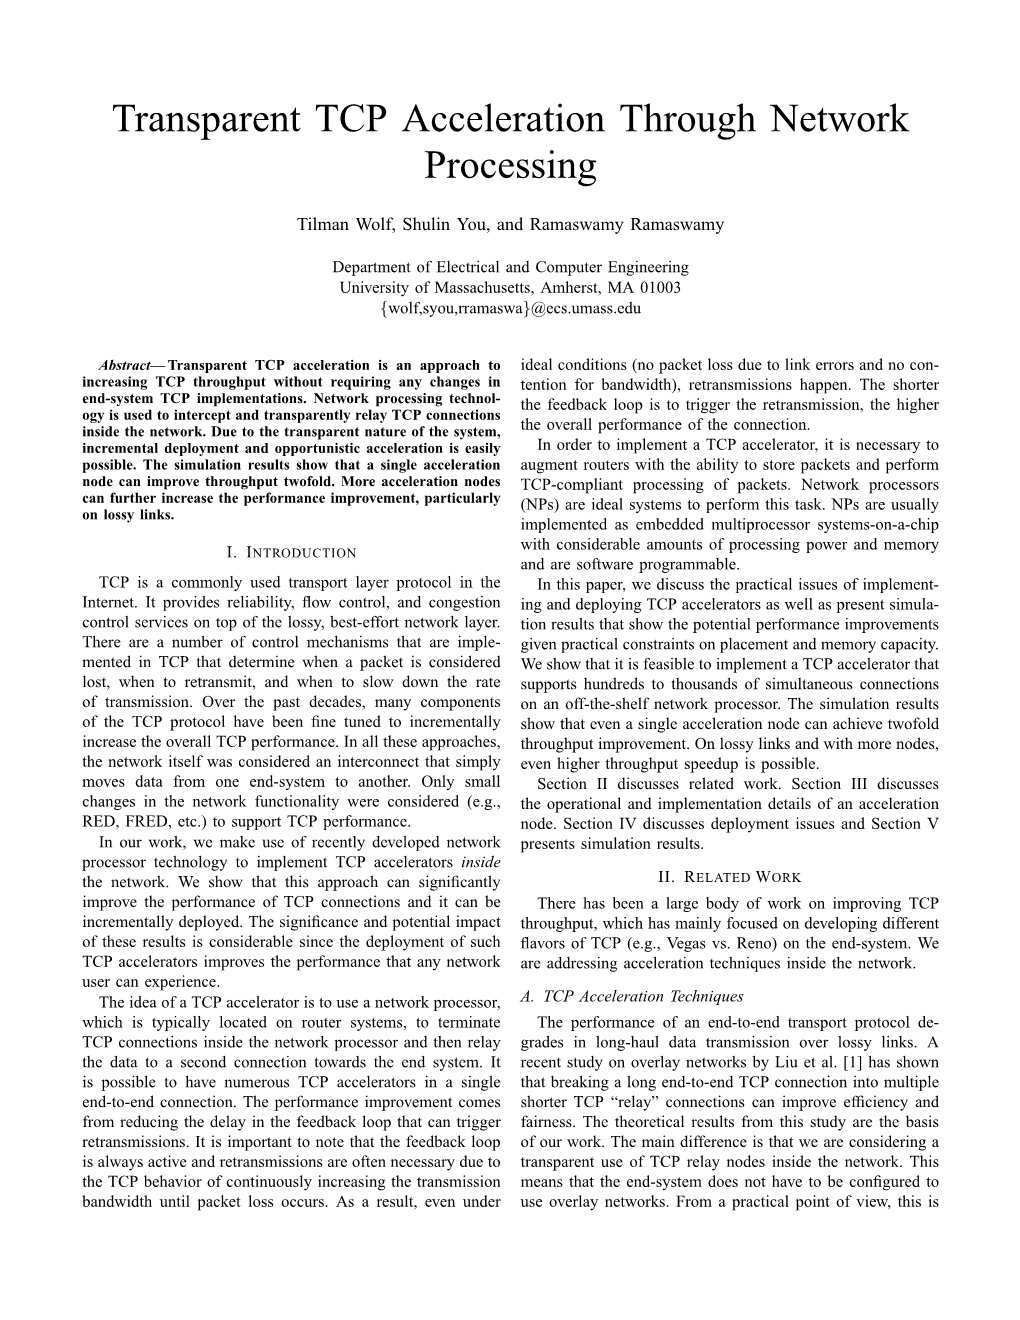 Transparent TCP Acceleration Through Network Processing